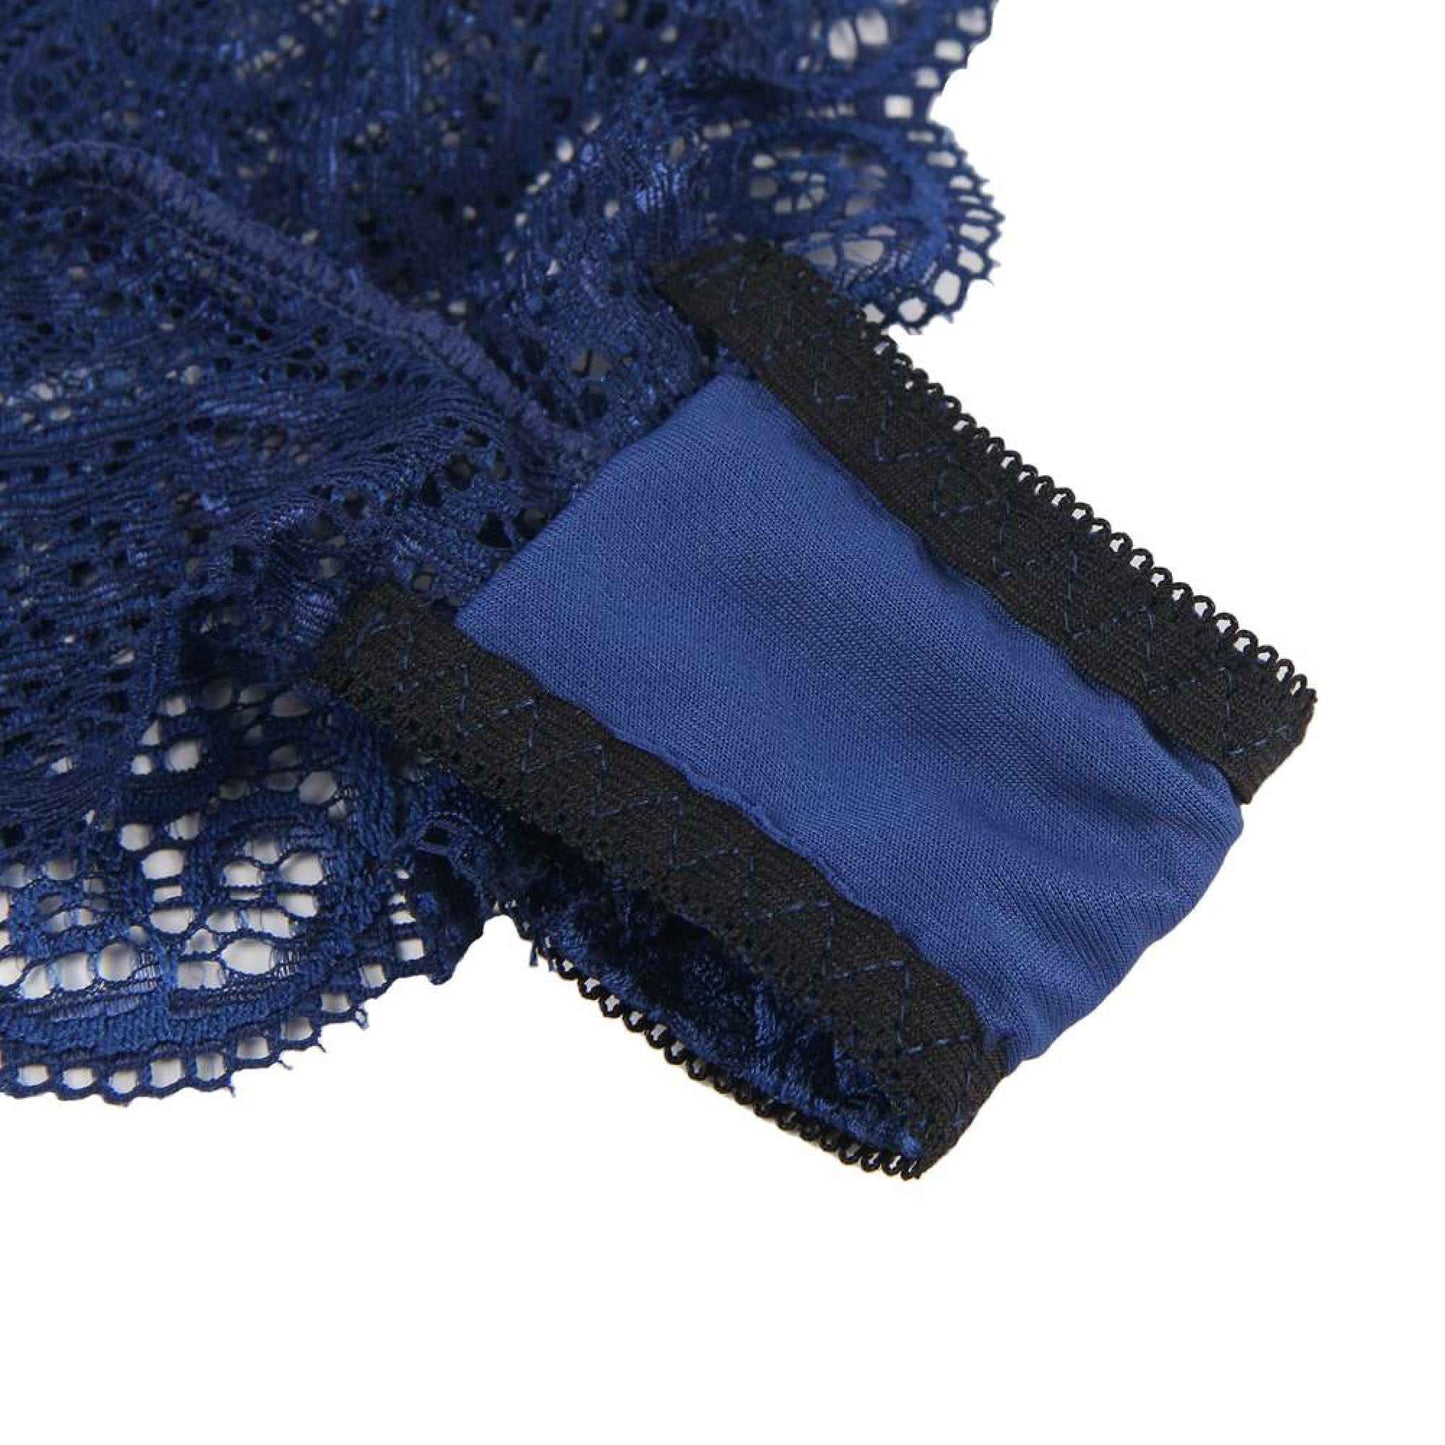 Blue 3 Piece Lingerie Lace Set - Bra Panties Boxer Sexy Simulated Silk Underwear